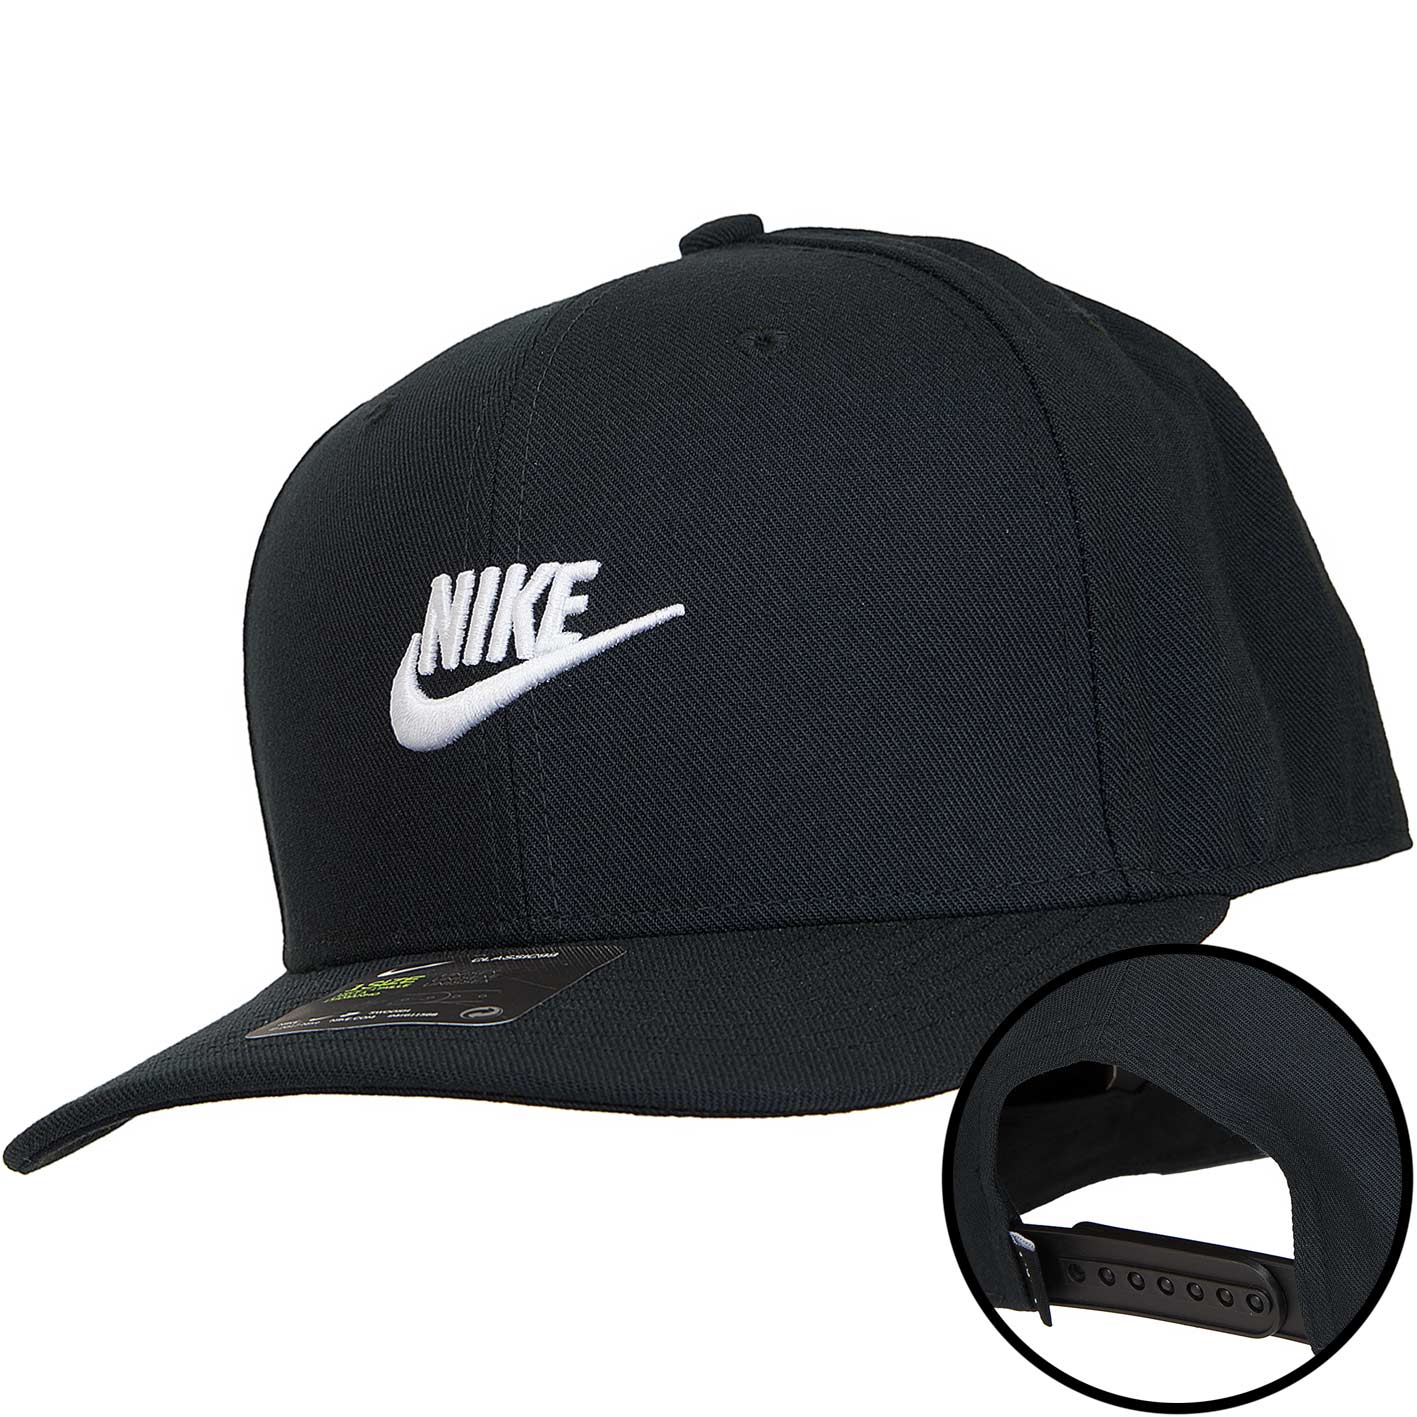 ☆ Nike Snapback Cap Futura Classic99 schwarz/weiß - hier bestellen!